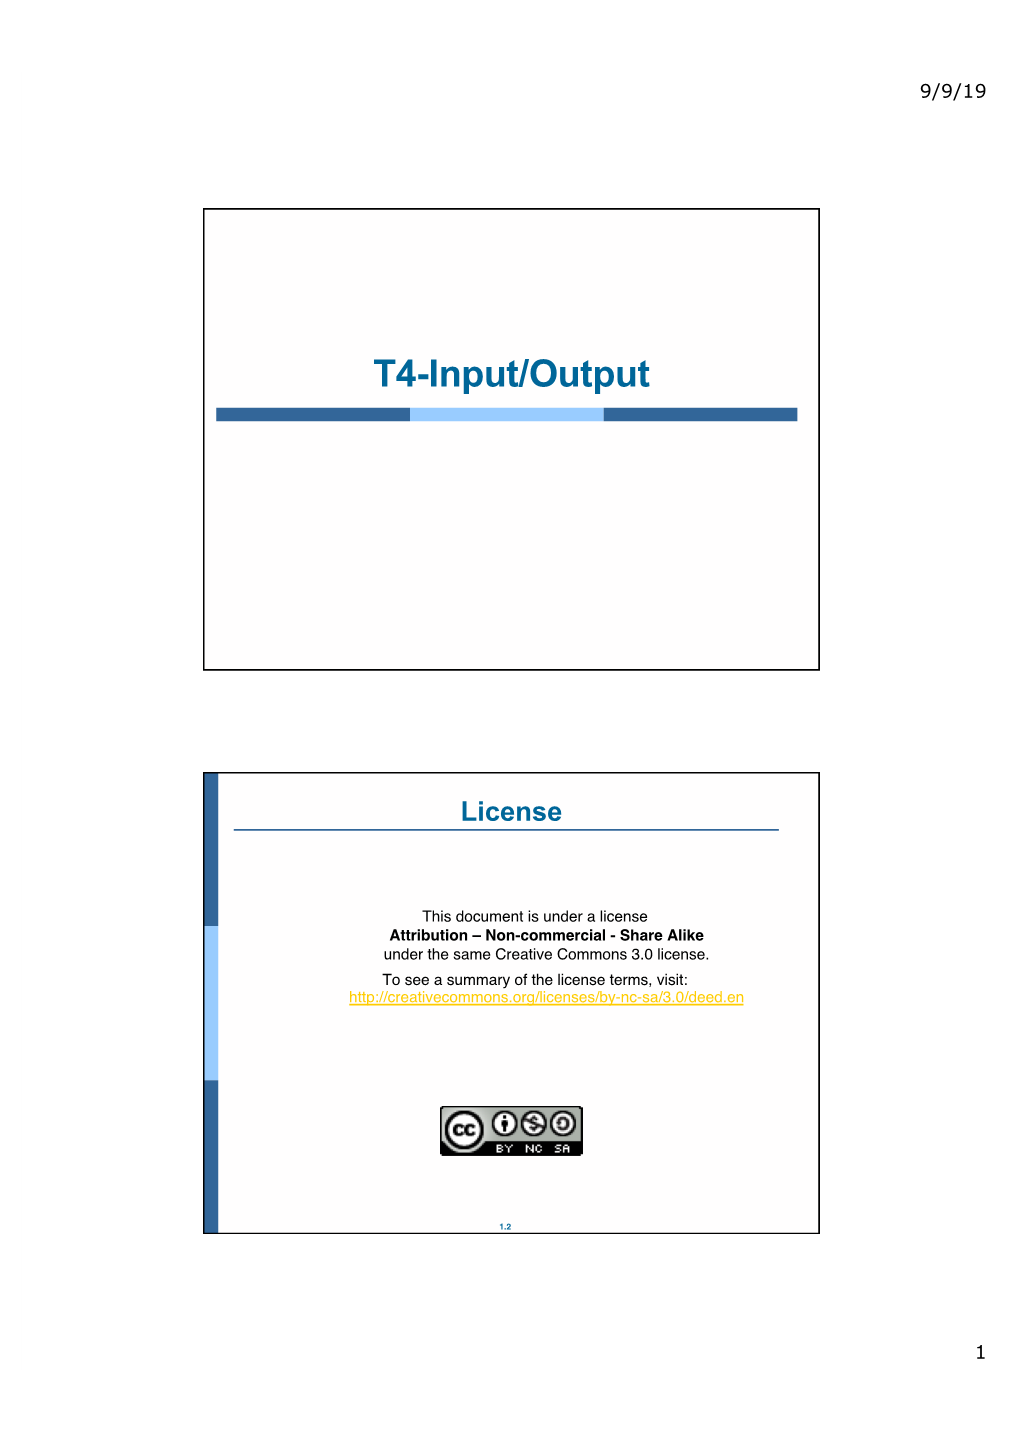 T4-Input/Output